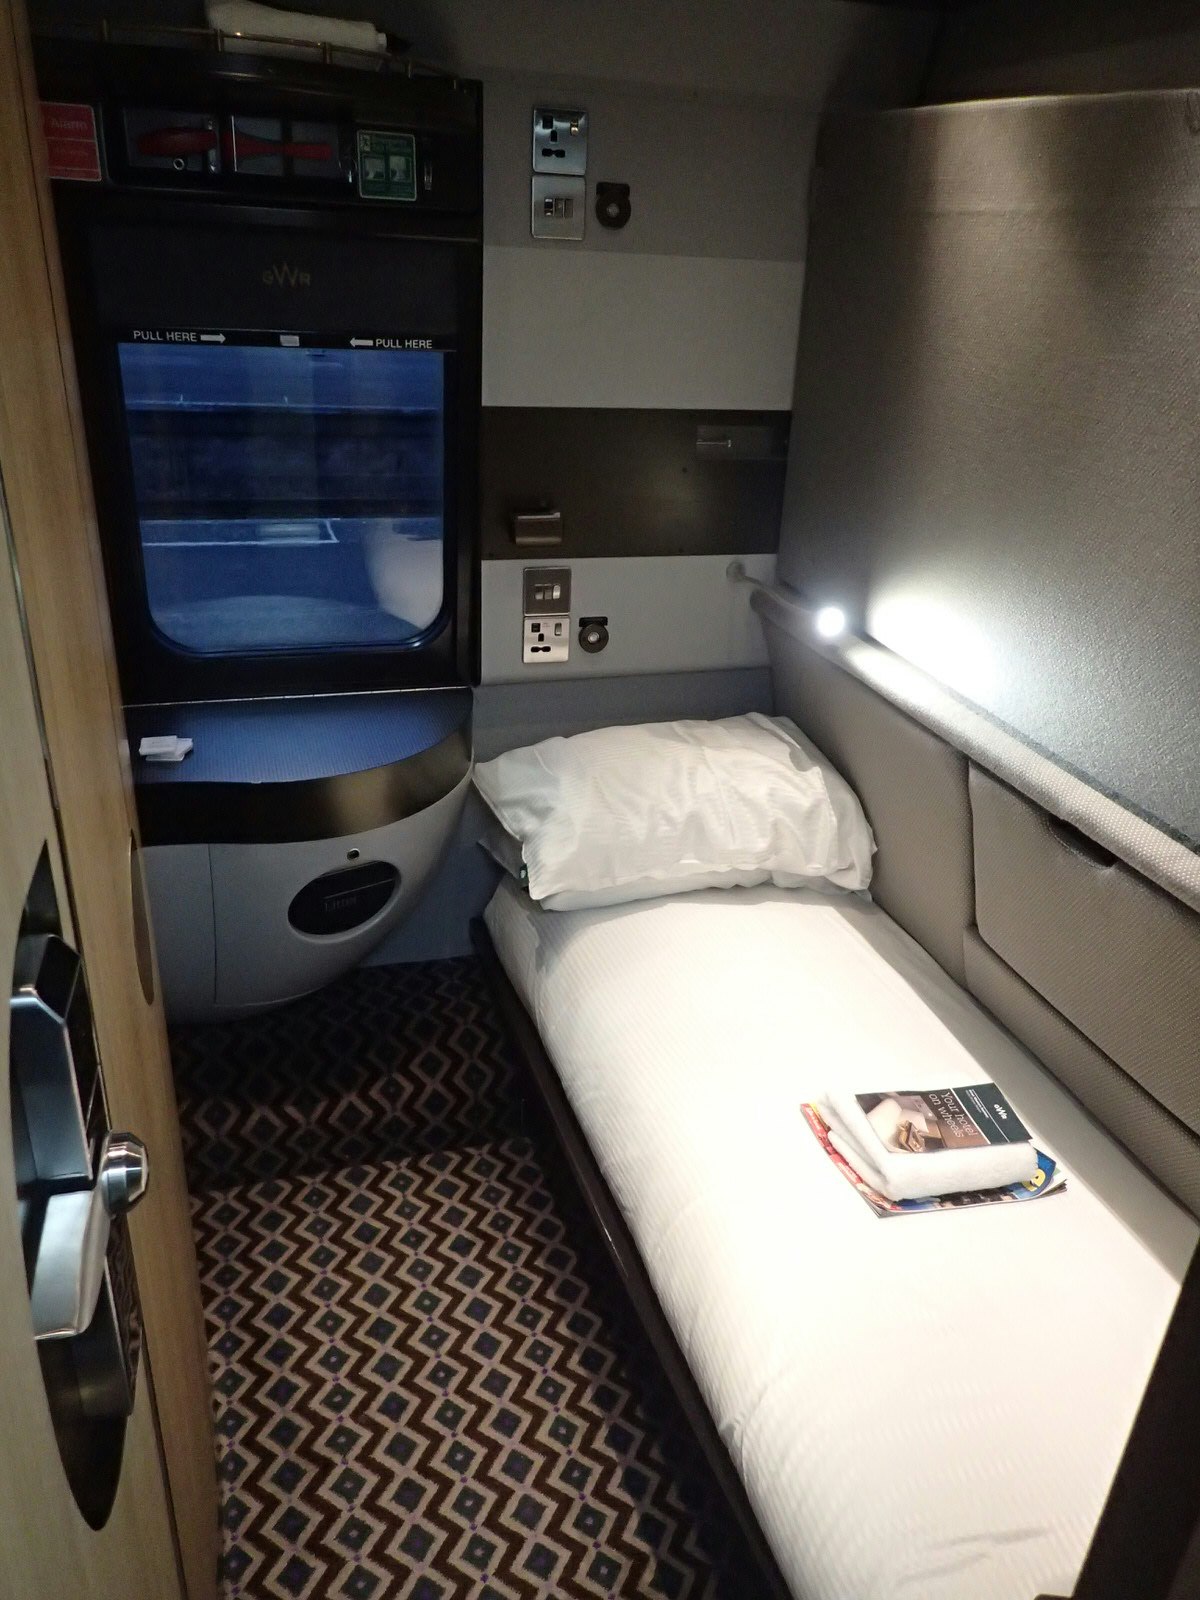 Night Riviera sleeper train single bed compartment from Cornwall to Paddington Station, London